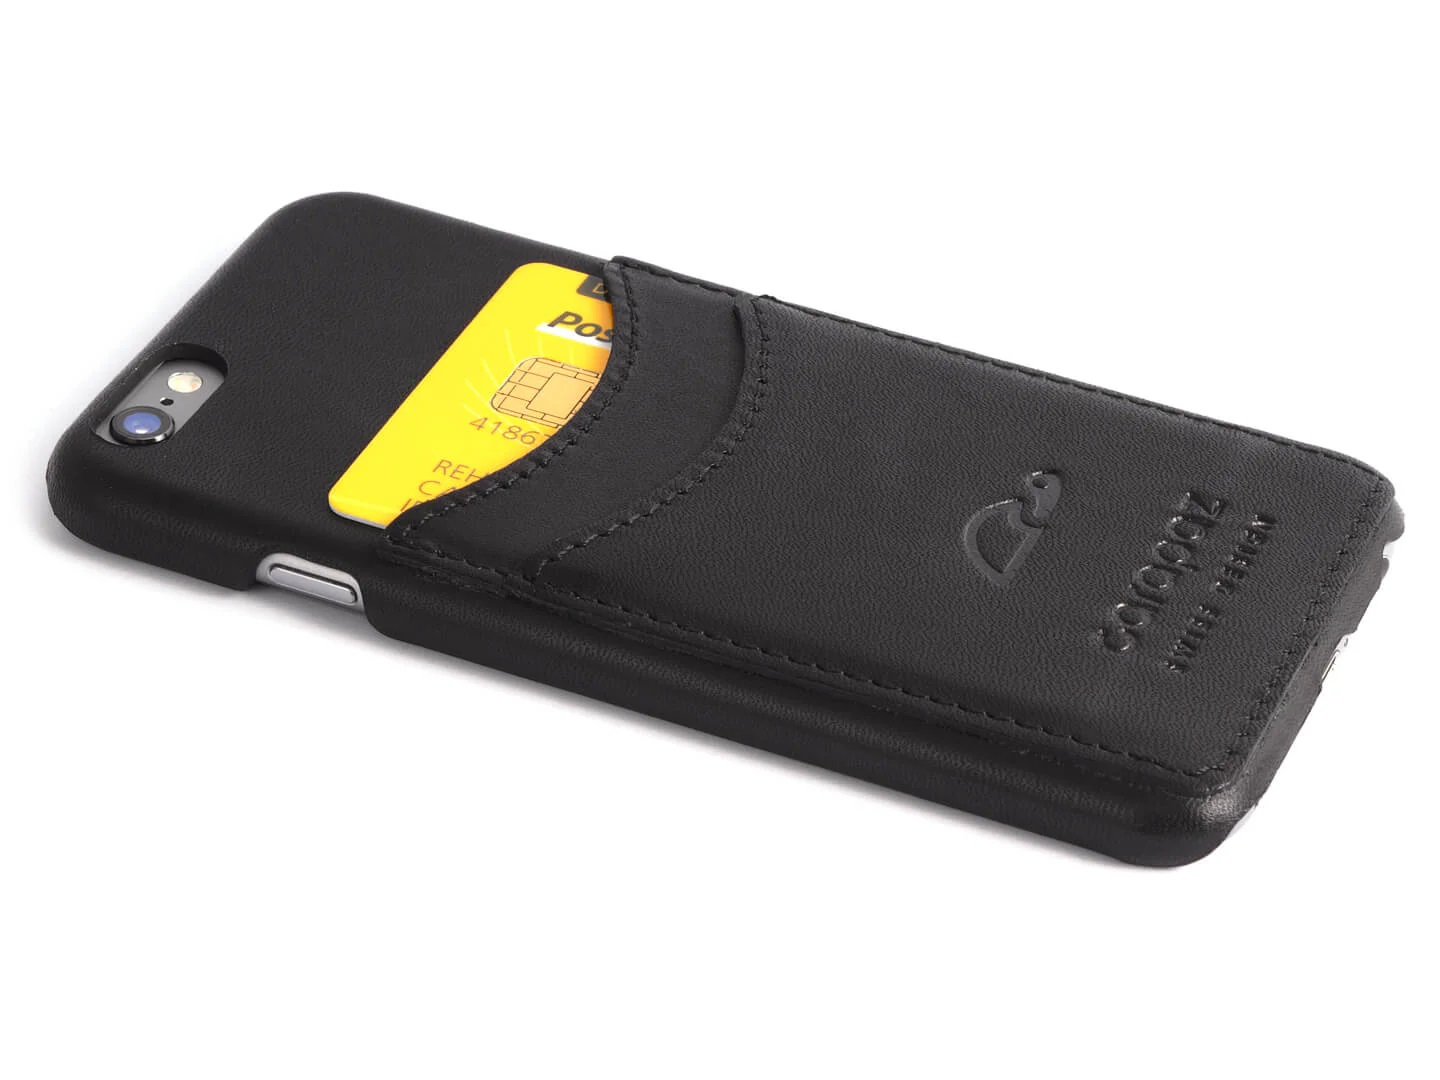 How iPhone 6 Cardholder Cases Streamline Your Essentials缩略图